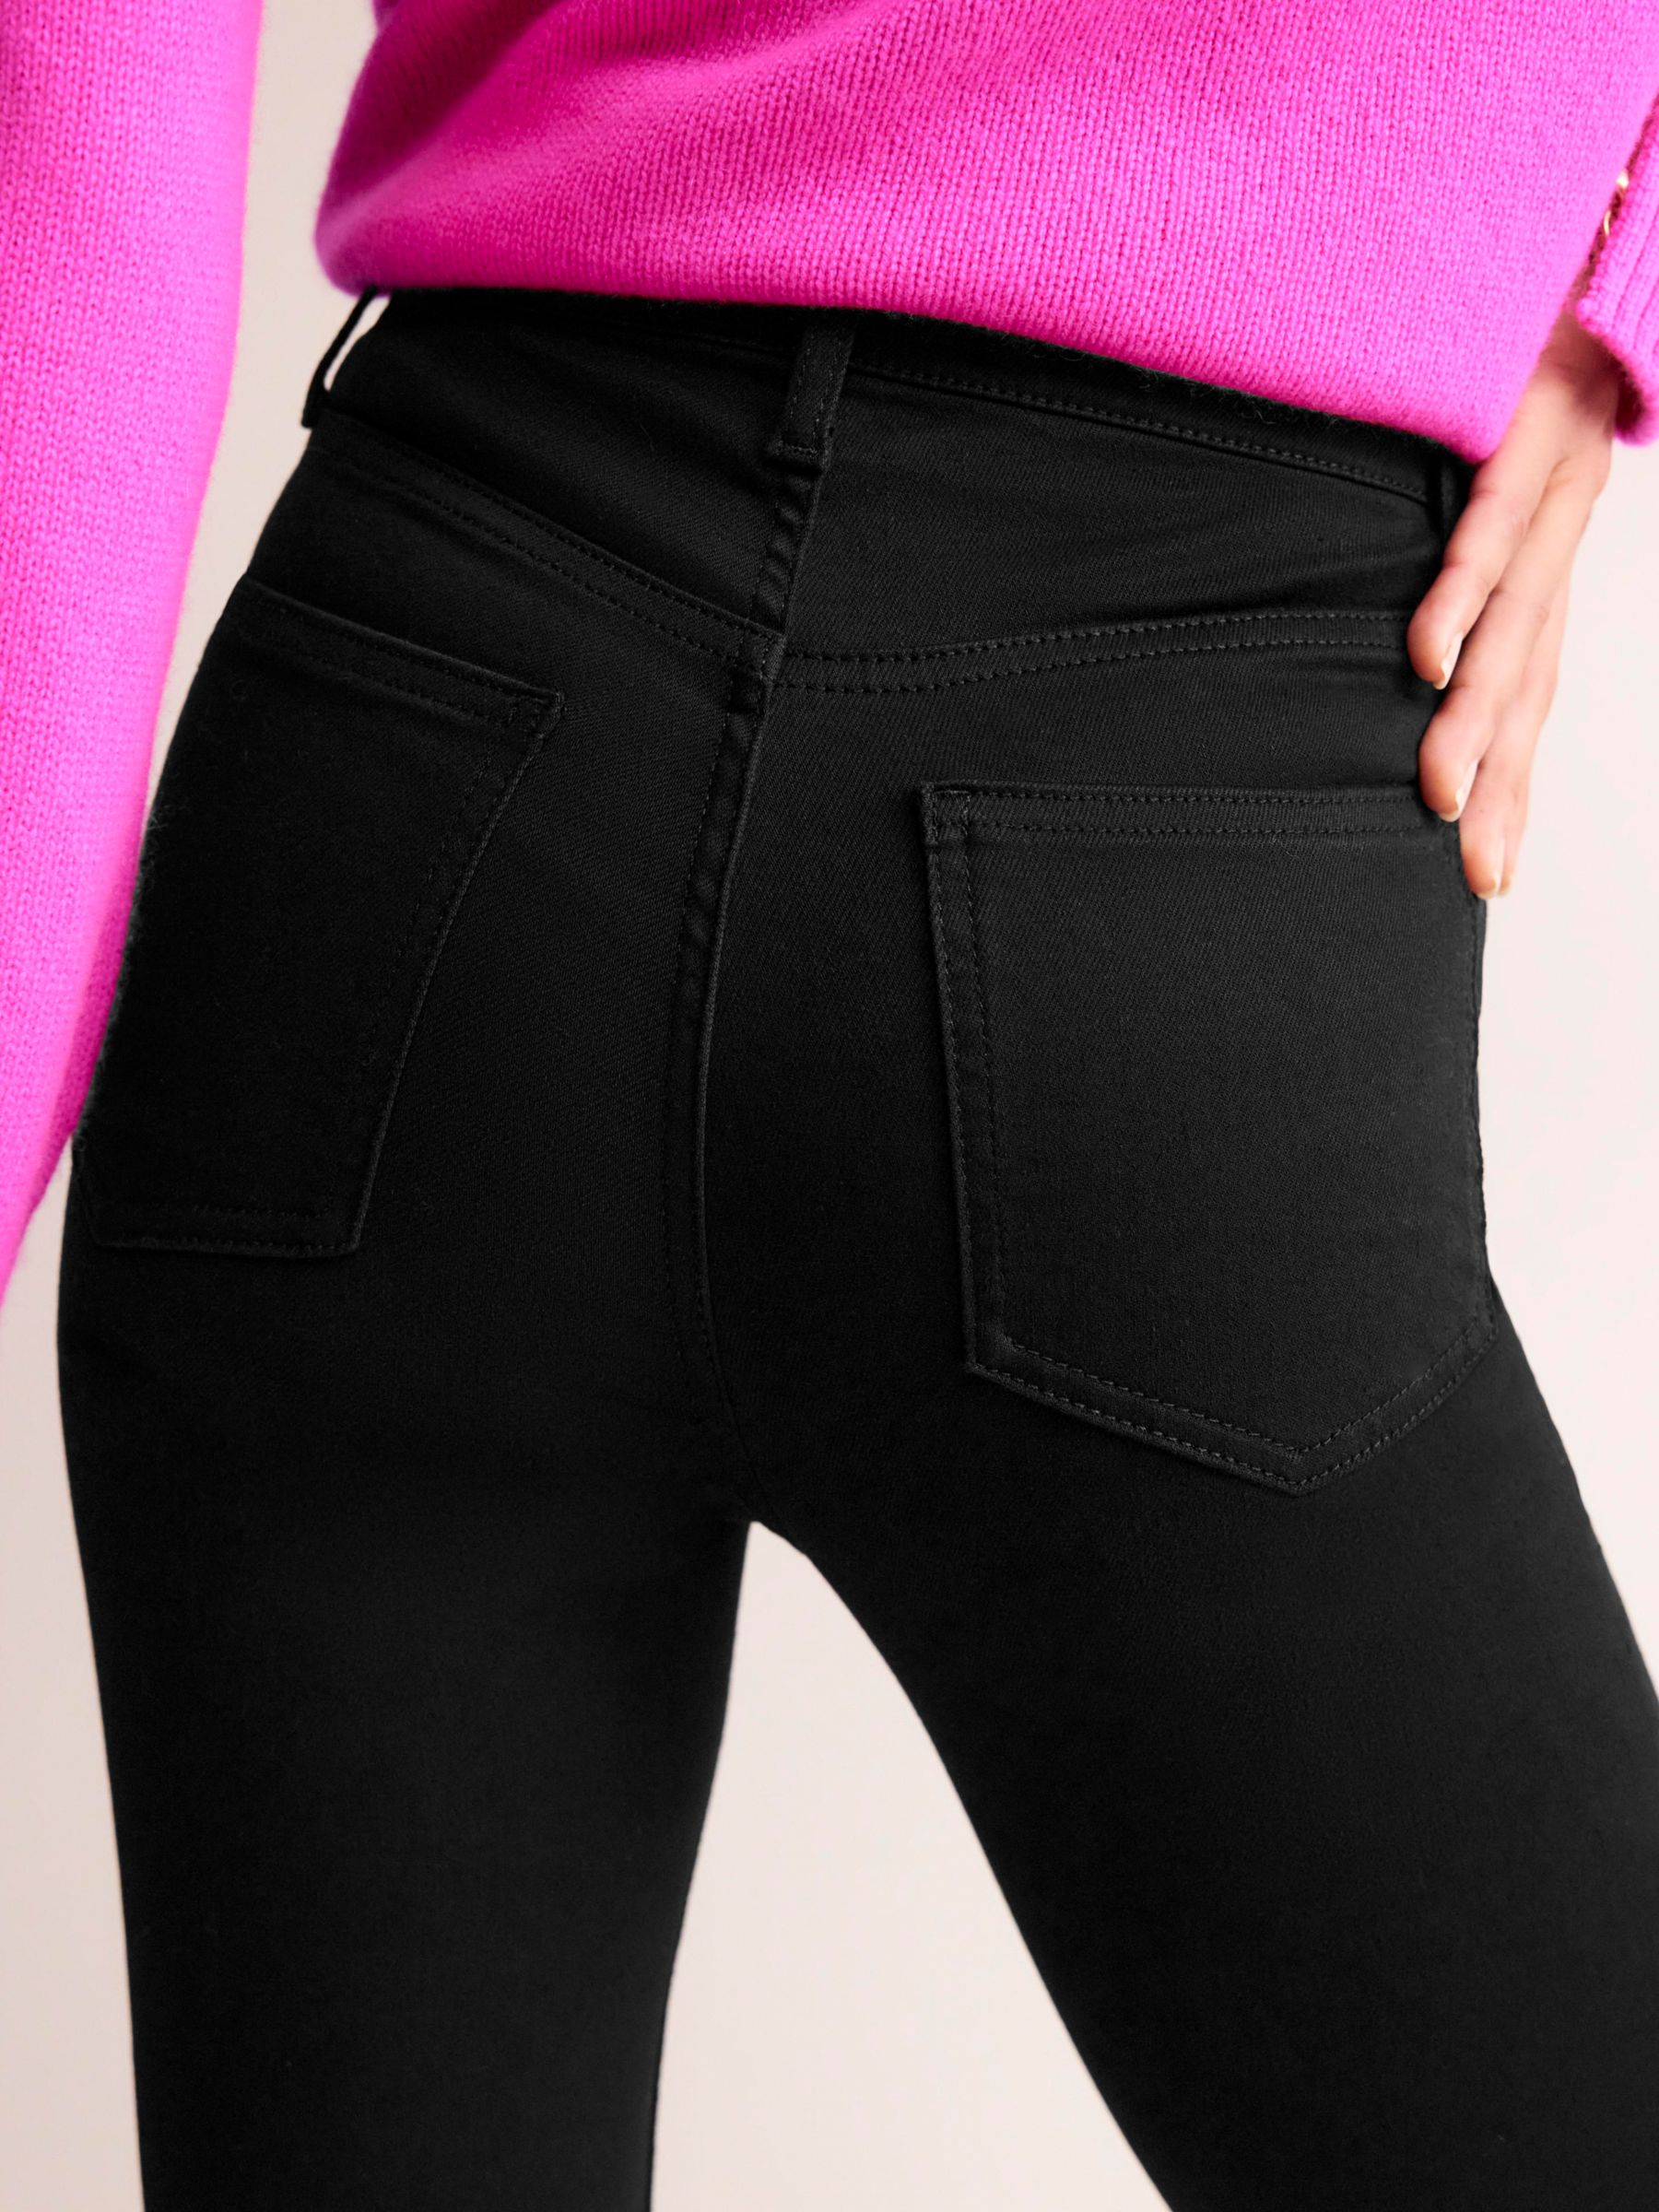 Buy Boden High Rise Skinny Jeans, Black Online at johnlewis.com